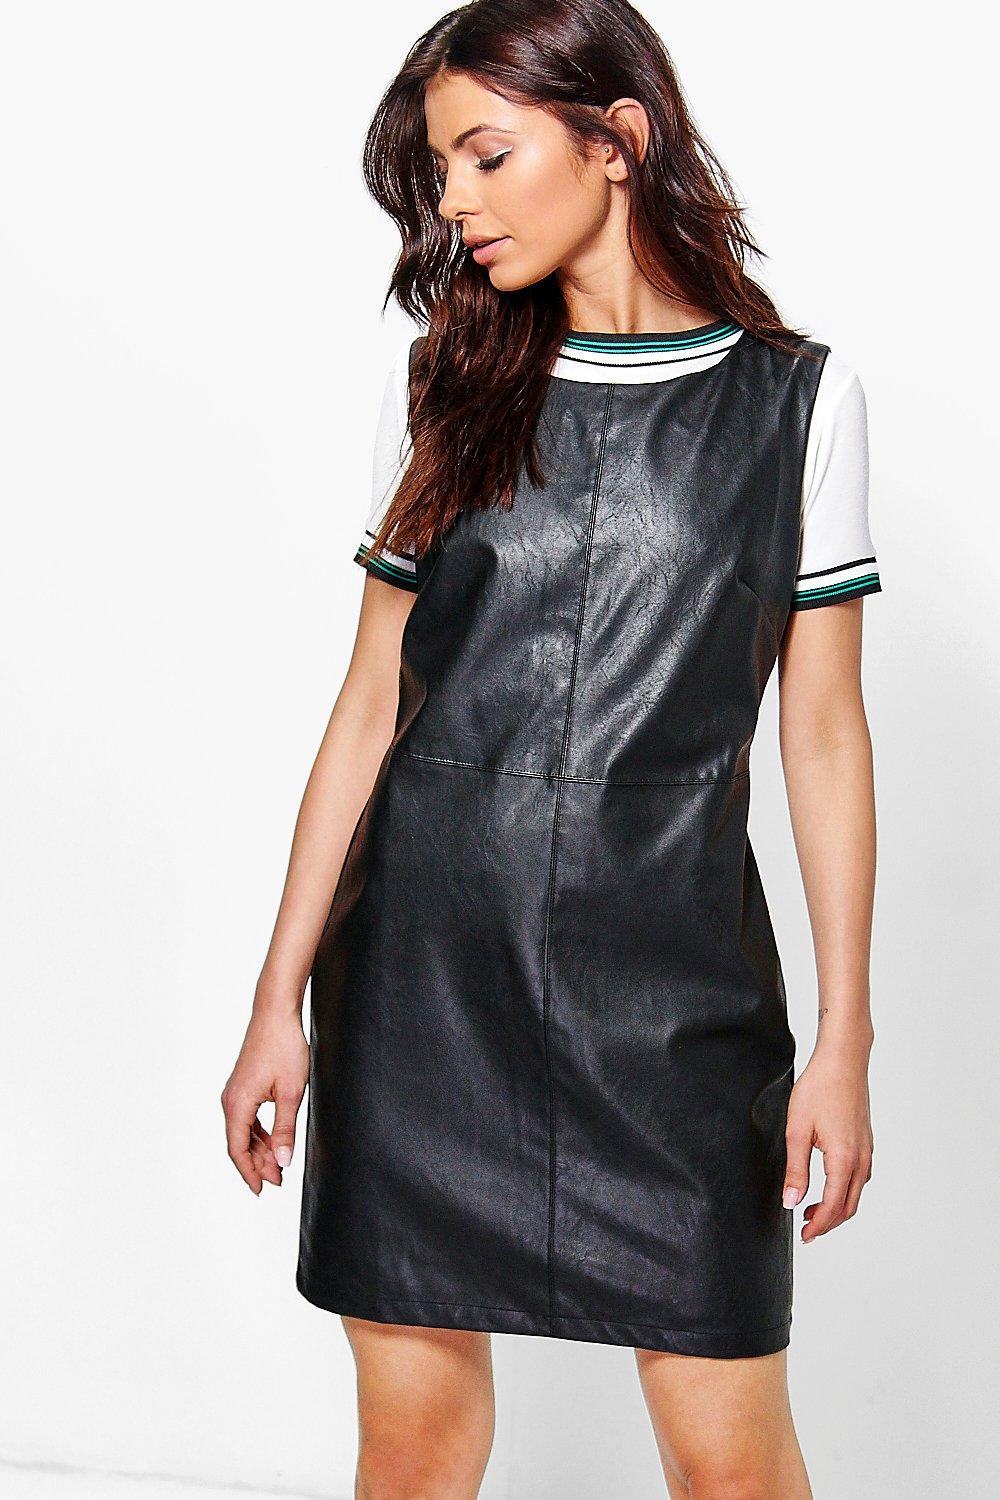 Boohoo Womens Ariela Faux Leather A-Line Pinafore Dress | eBay